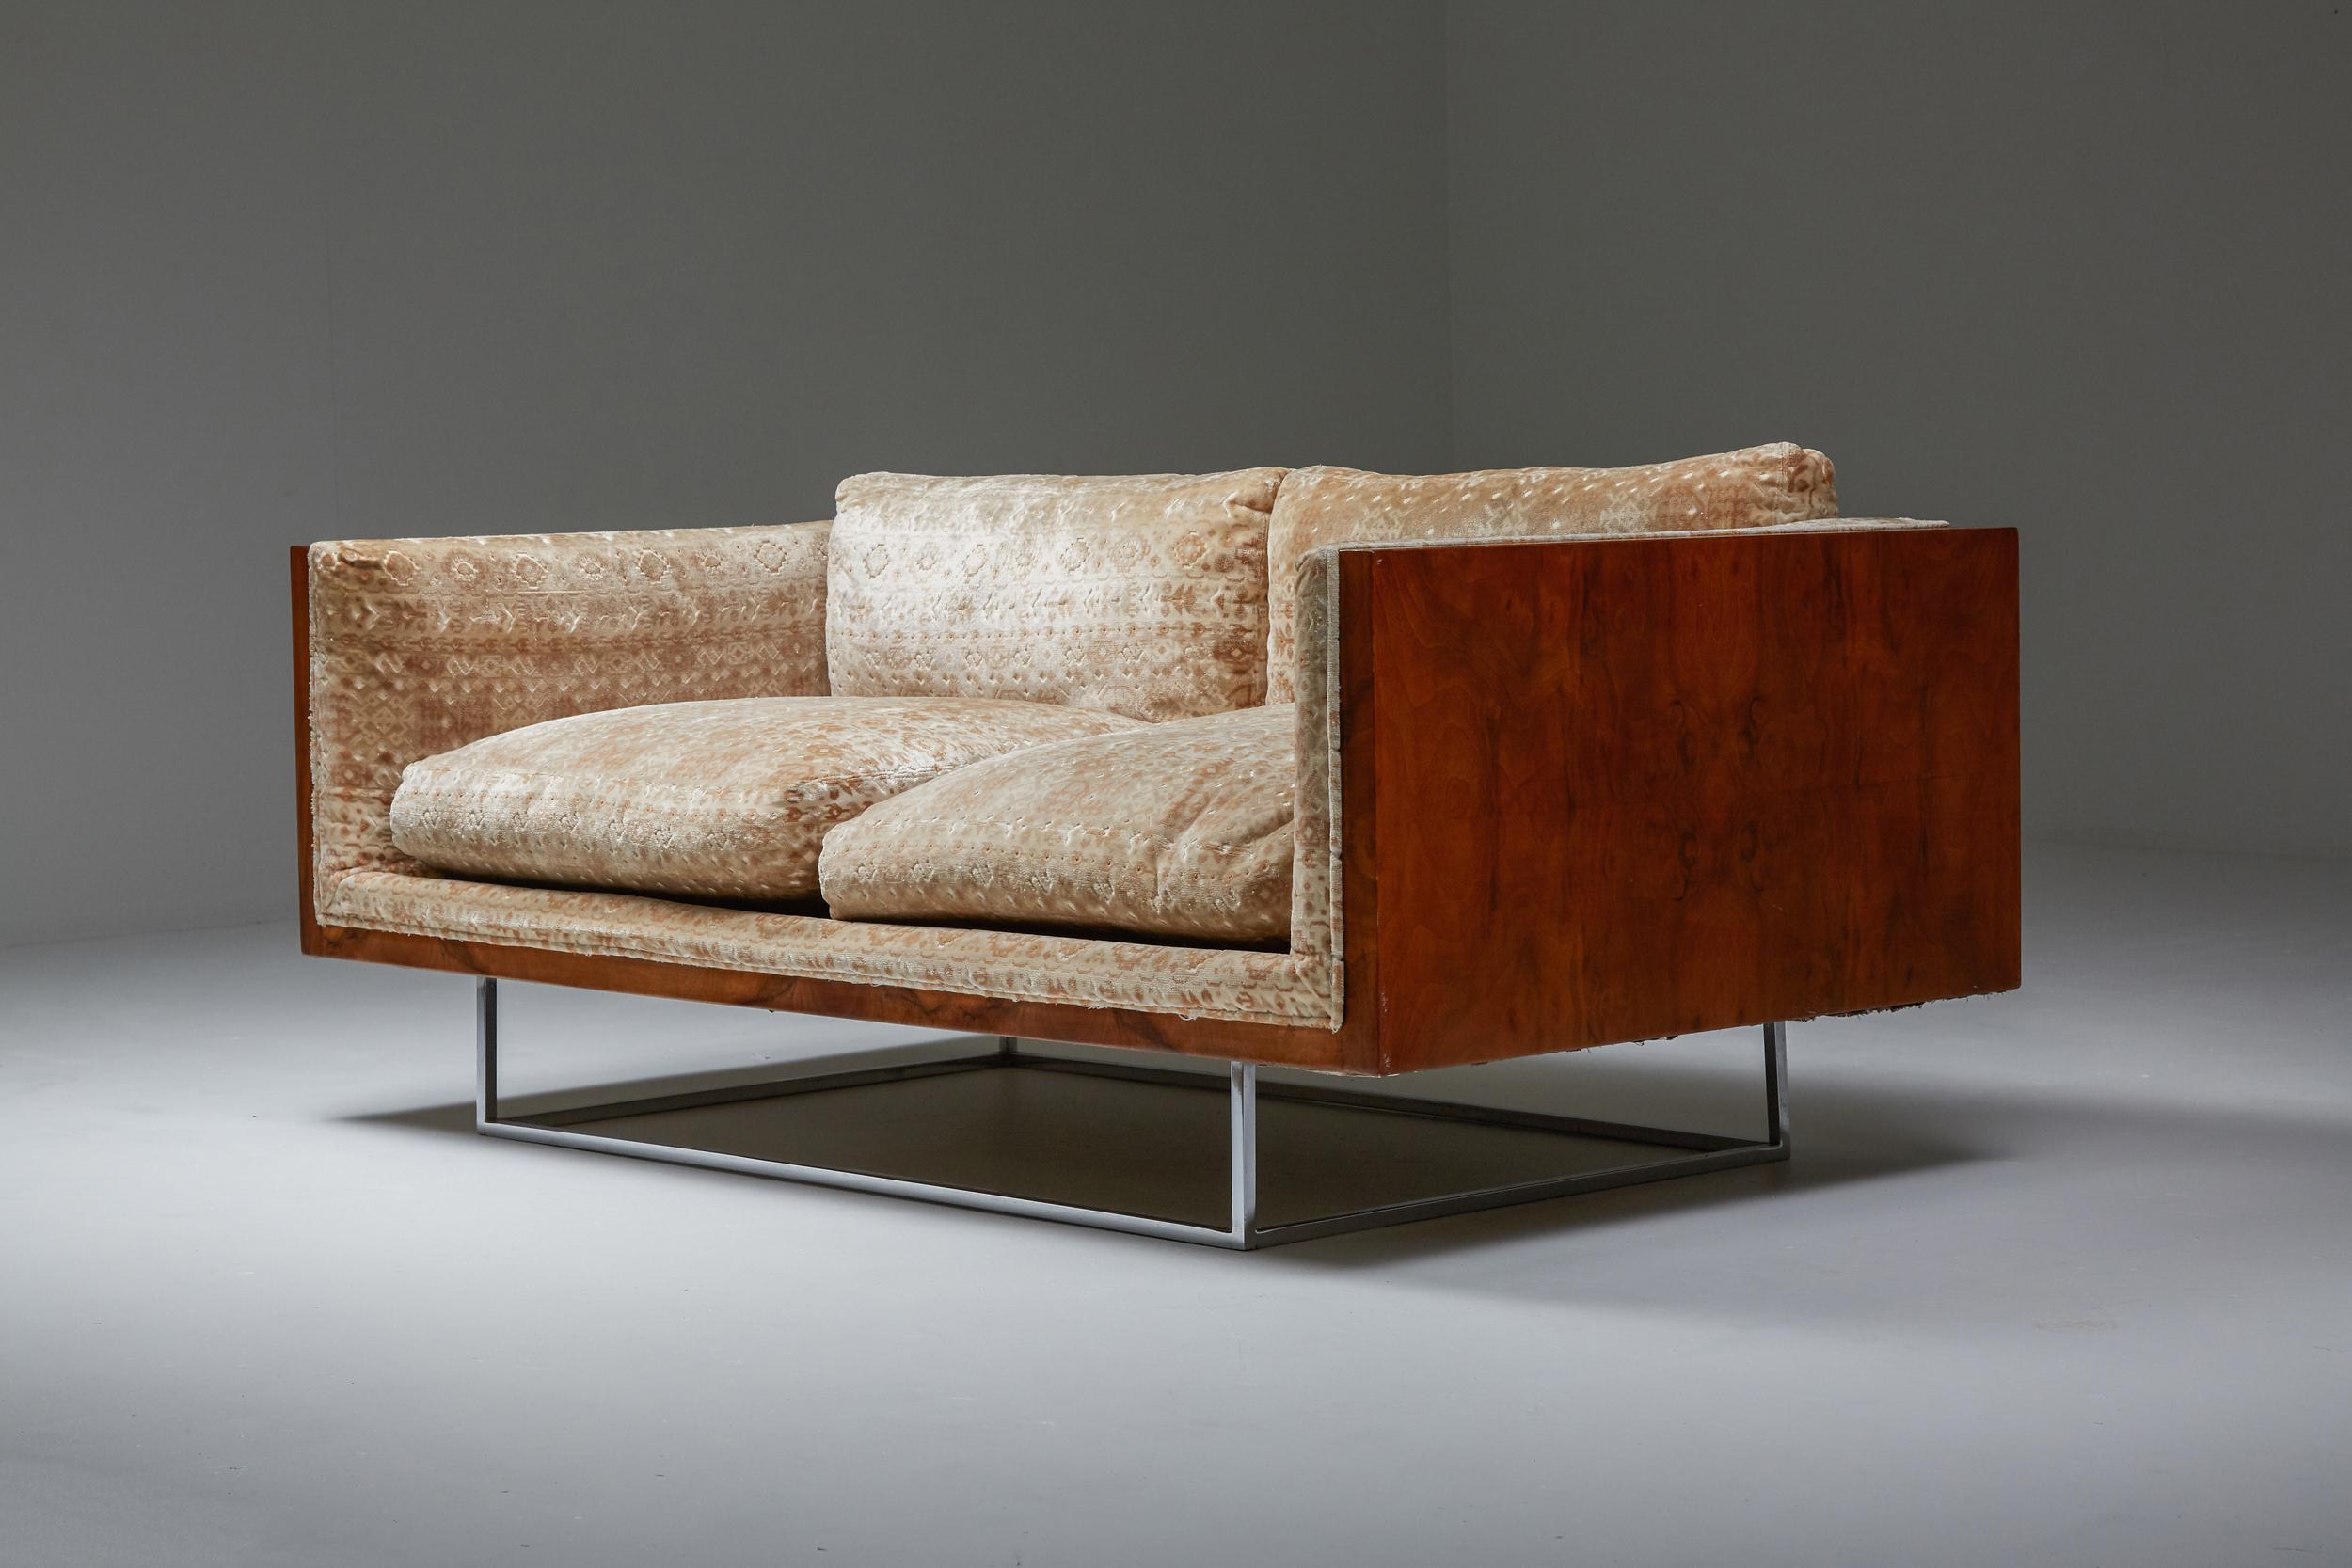 American Craftsman American Post-War Design, Milo Baughman Love Seat Sofas, Burl, Chrome Sofa, 1971